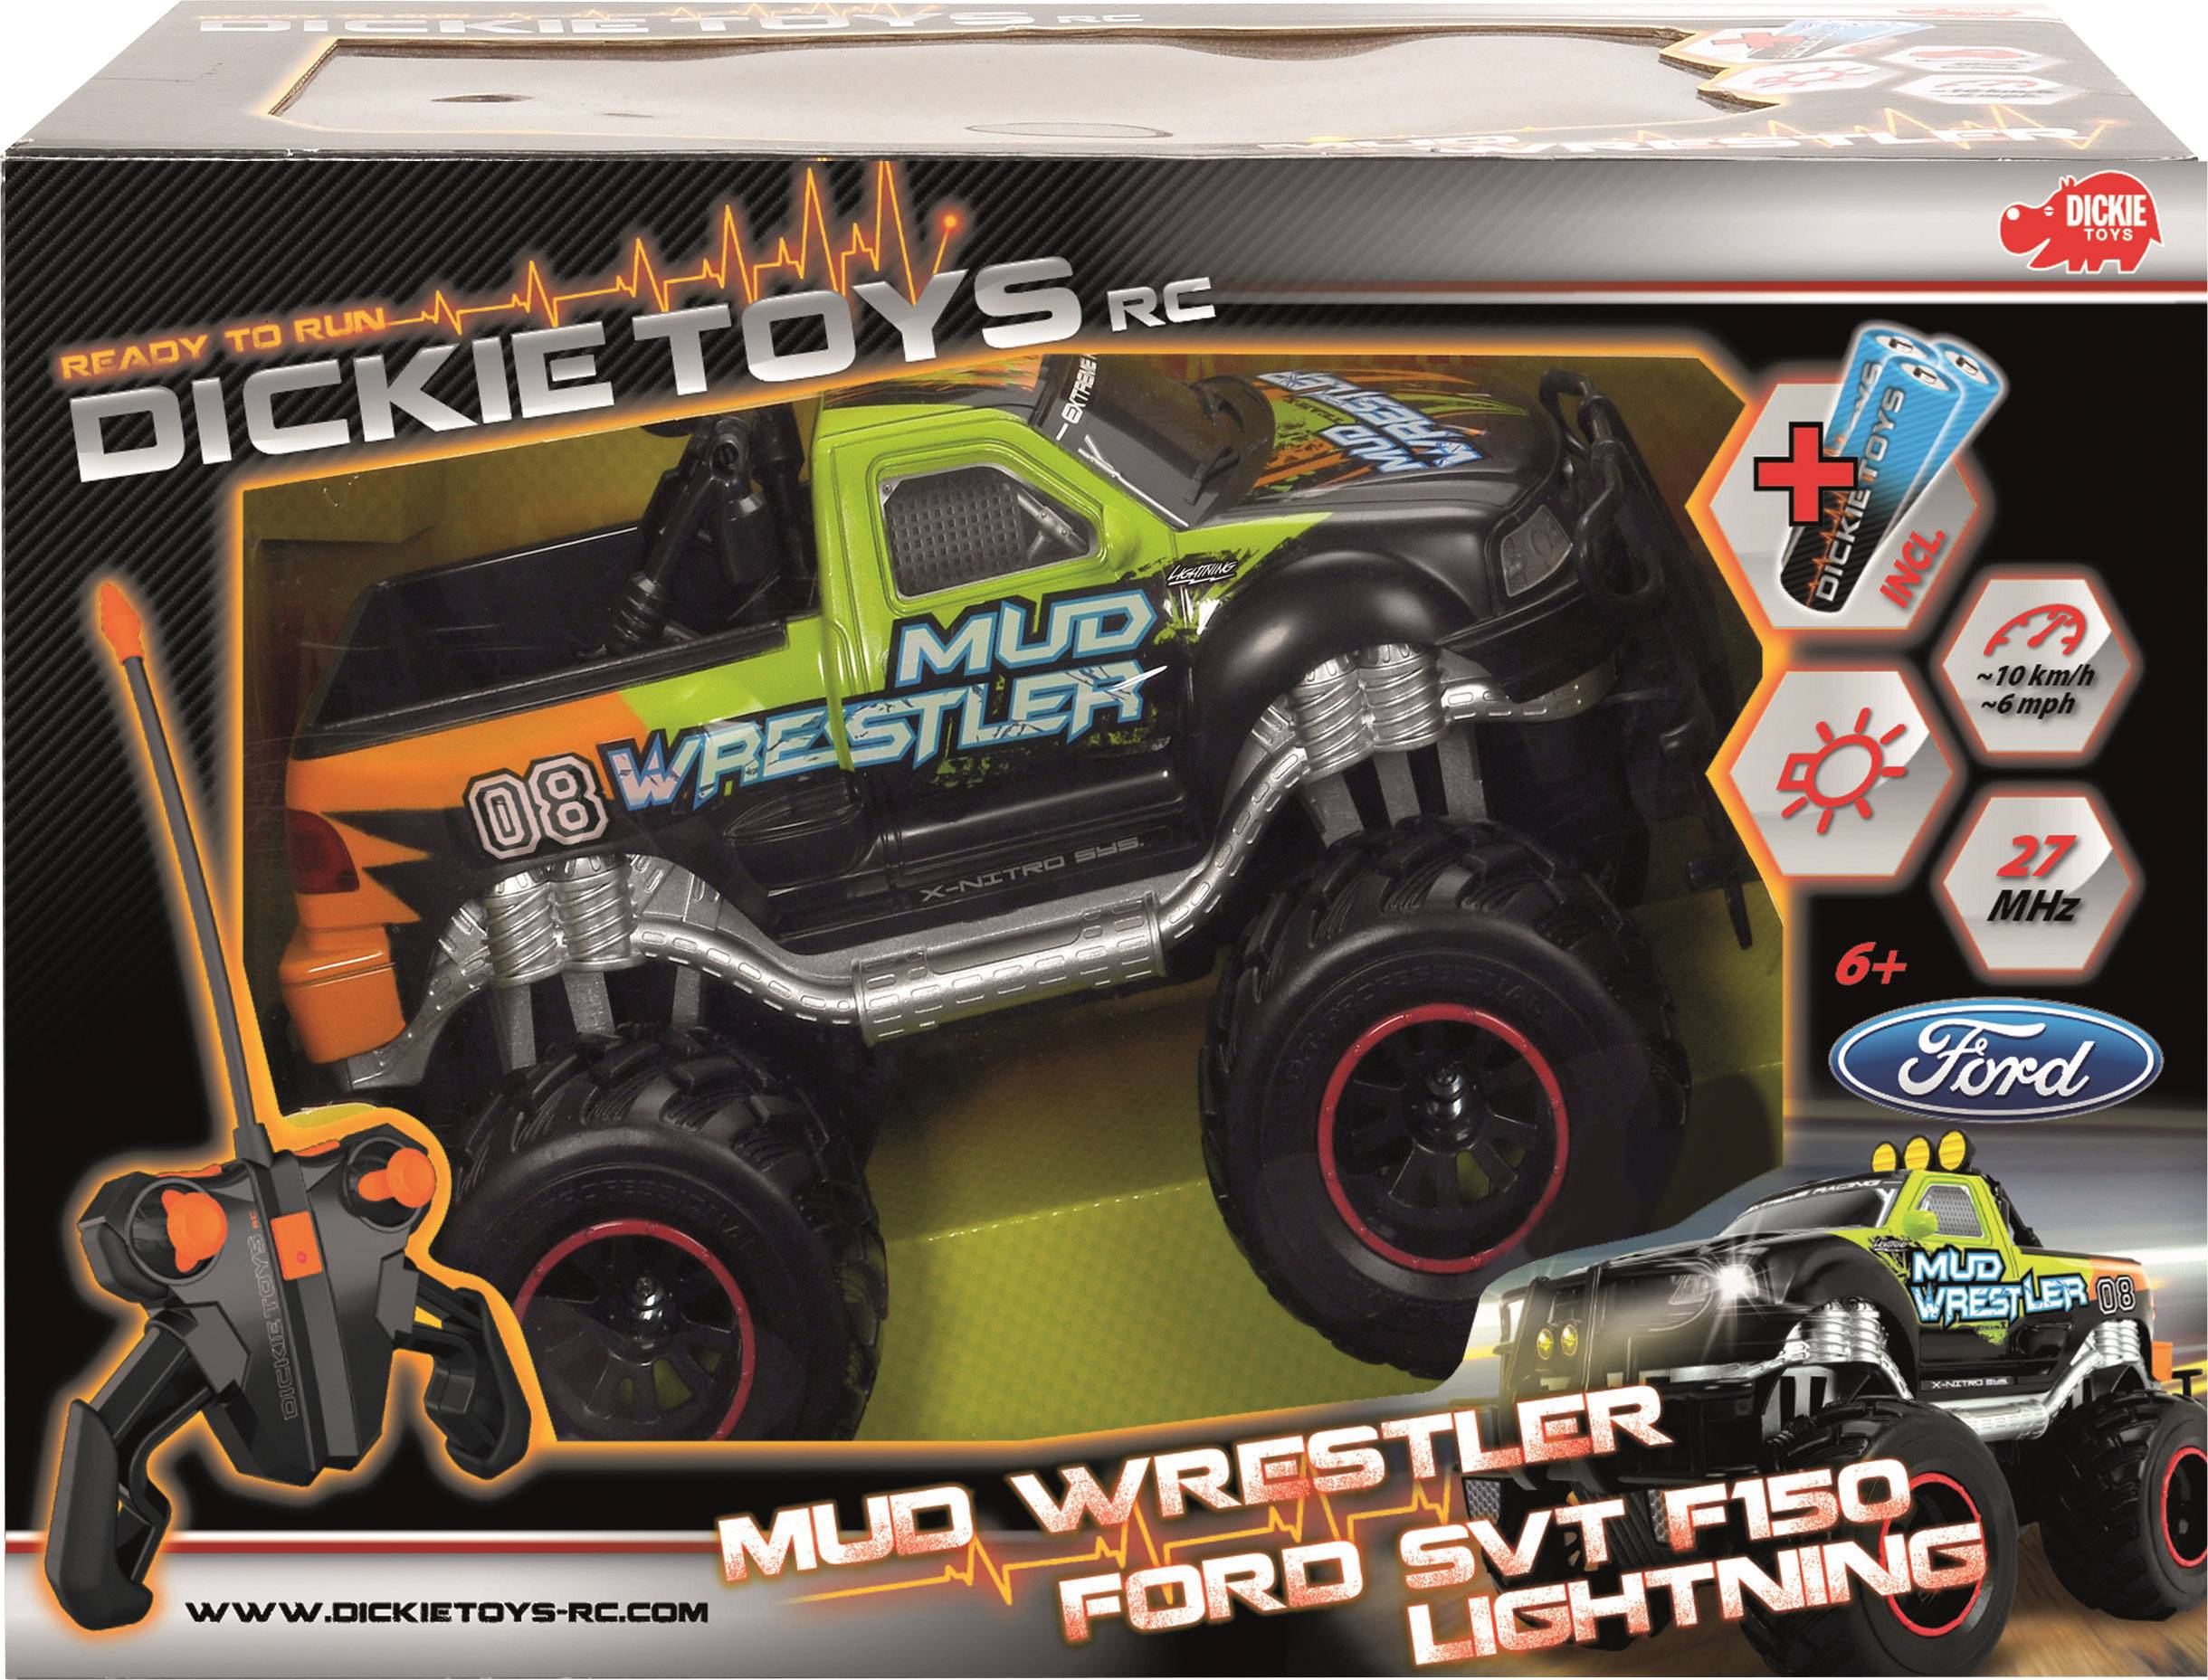 dickie toys rc mud wrestler